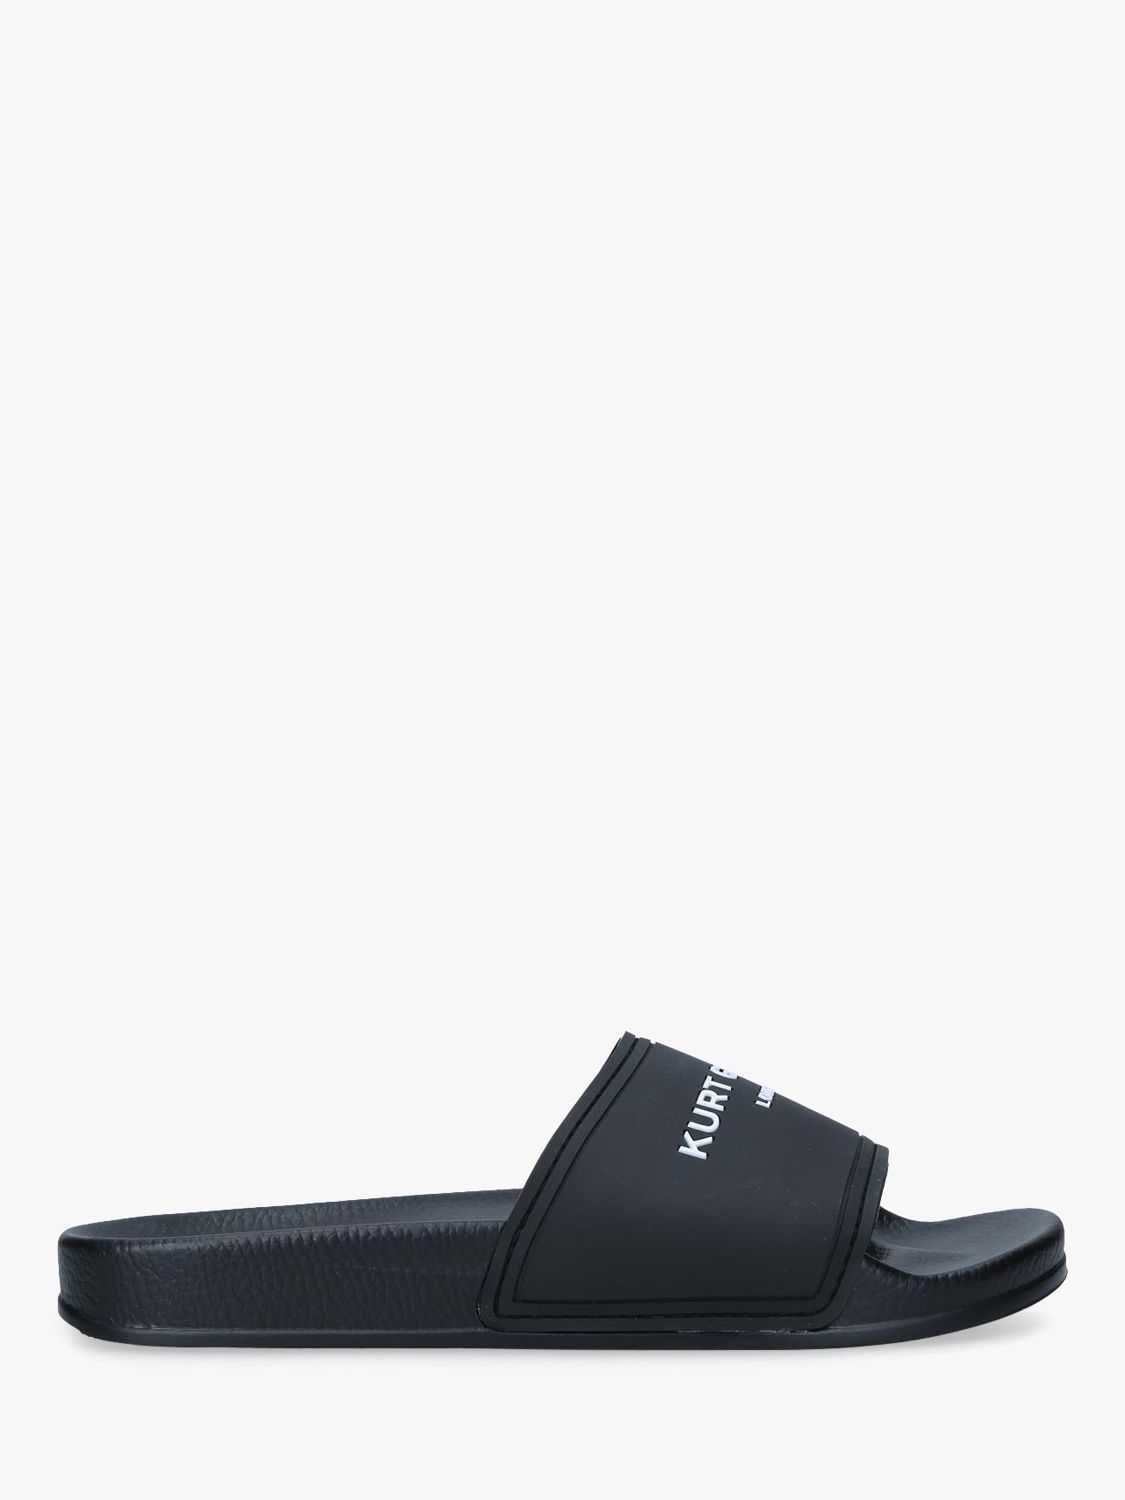 Flip-Flops/Slides/Sandals - 200 Pairs – Bargains & Bundles